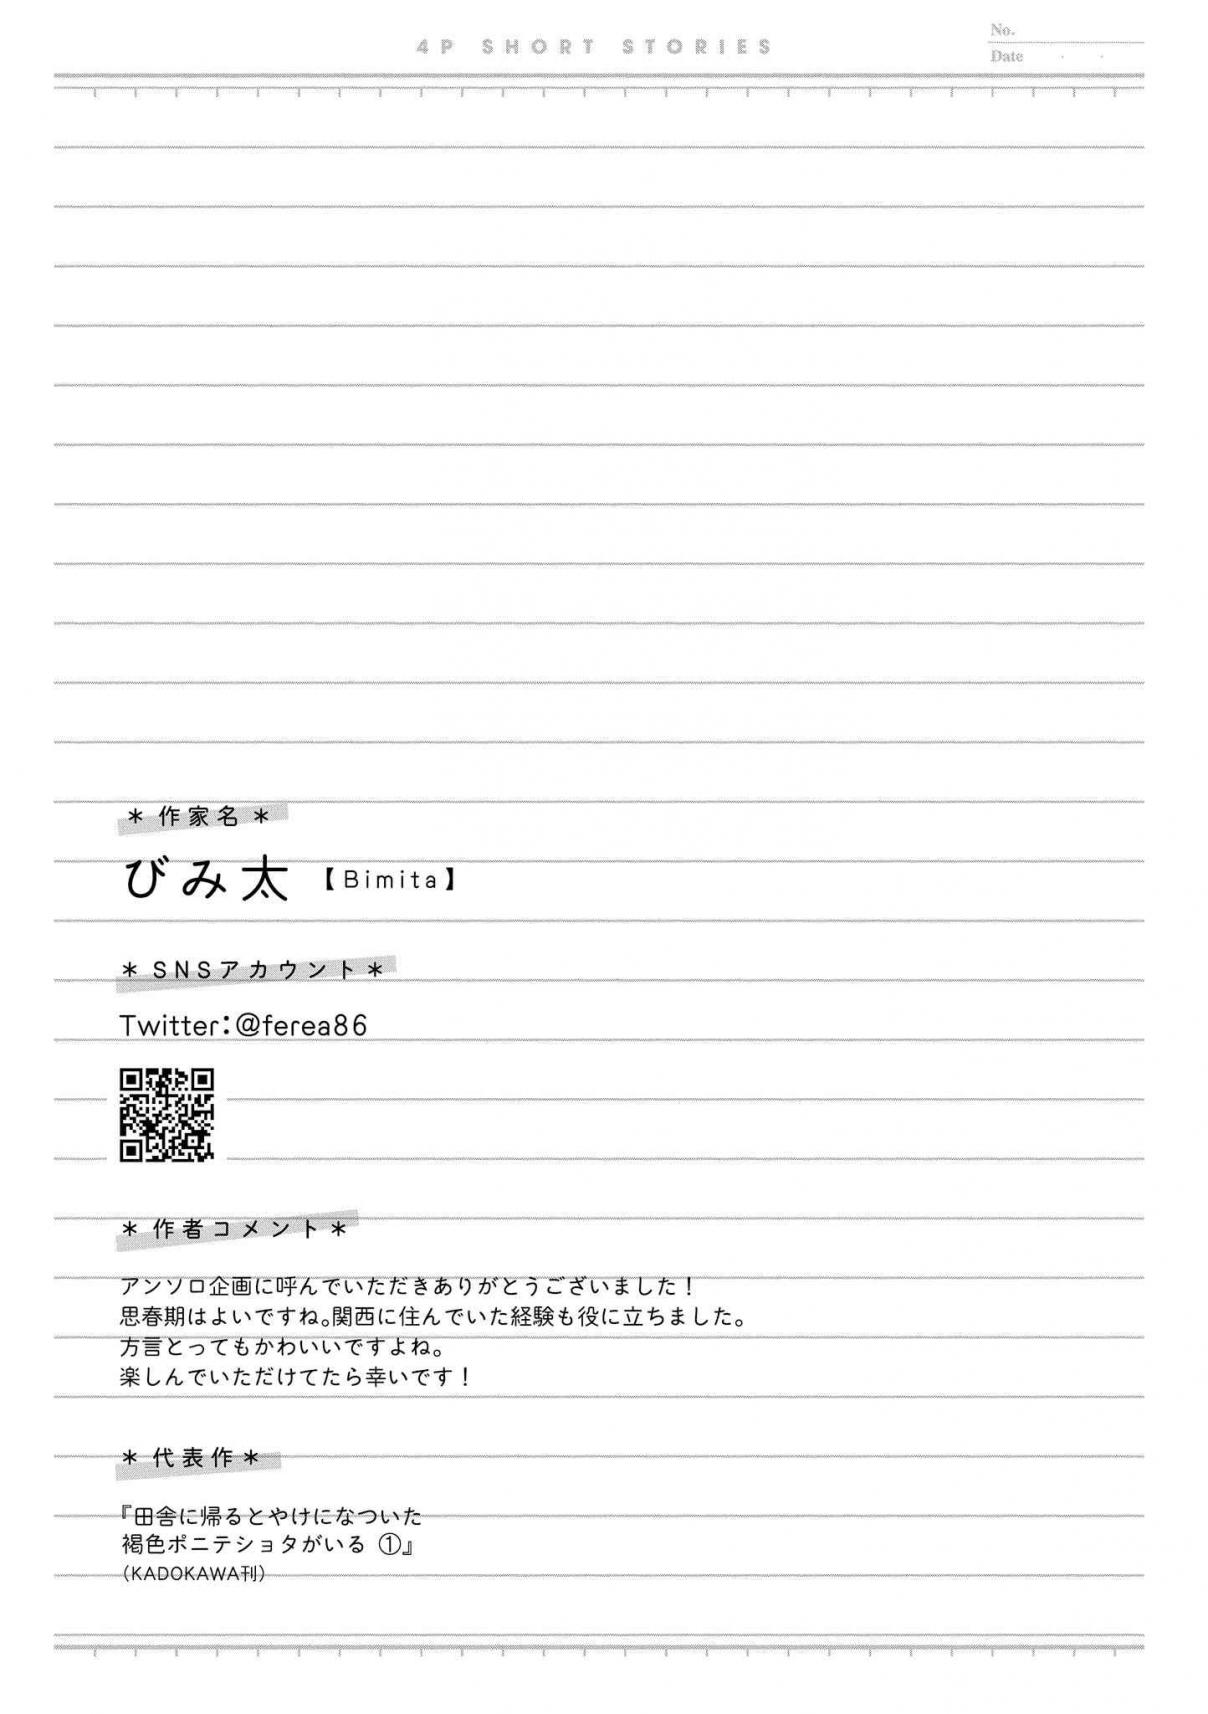 “It’s too precious and hard to read !!” 4P Short Stories Vol. 1 Ch. 15 NatsuNako [by Bimita]